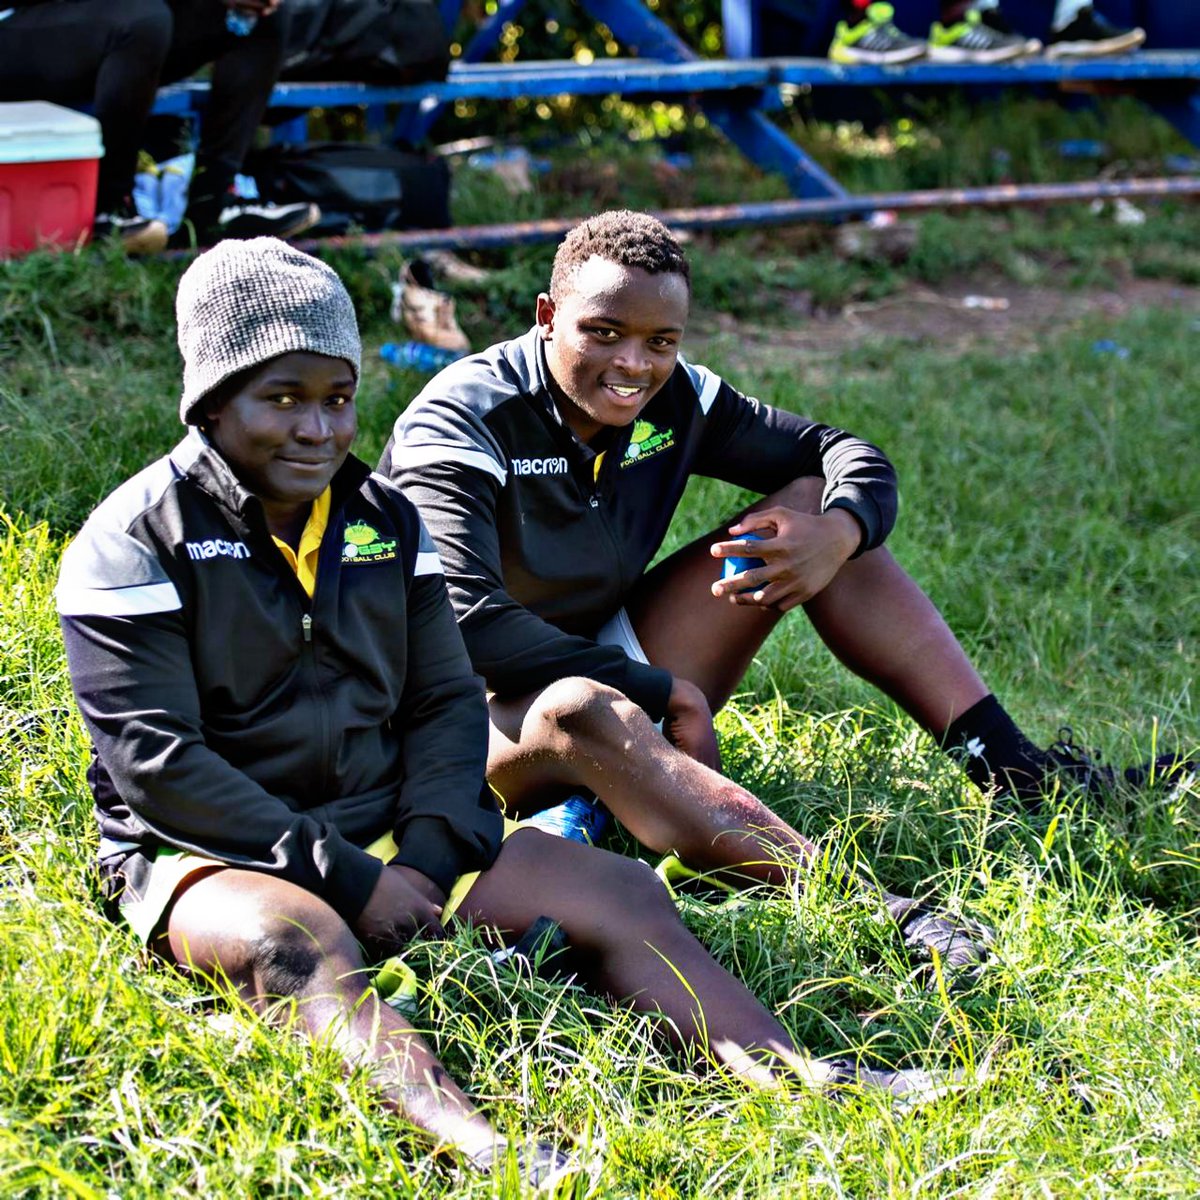 Good morning from the unbeaten #GreatRift10Aside champs 🏆🔥😎 #KabrasSugar #TangtangRugby #KenyasSweetest